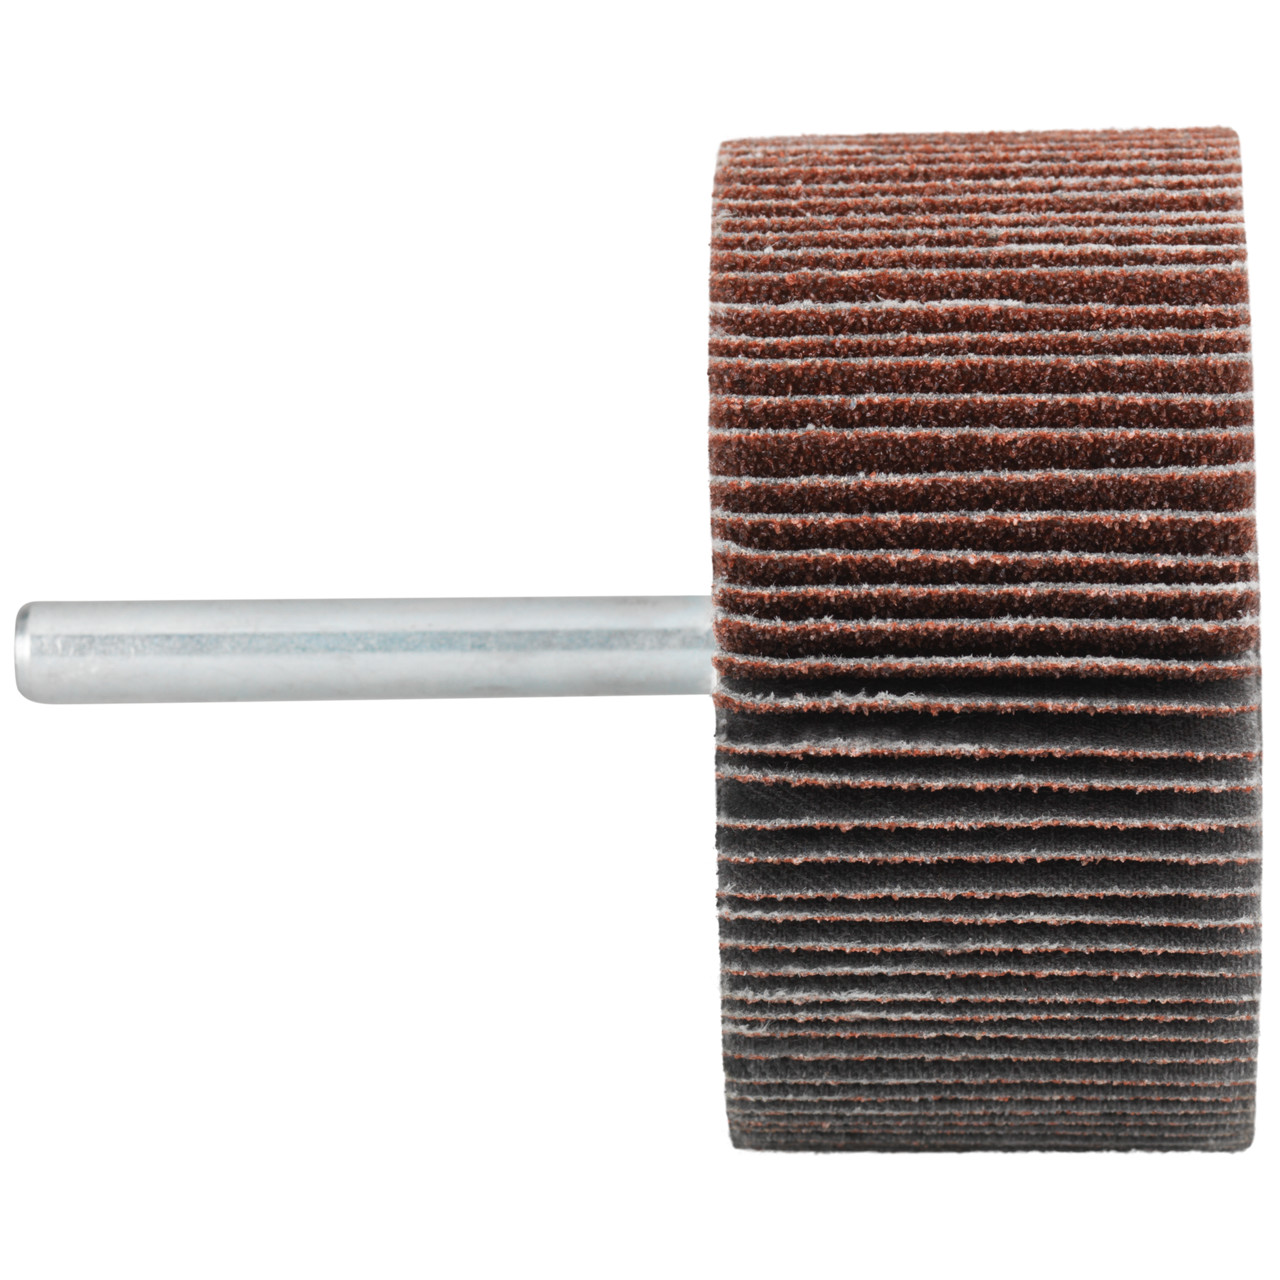 Tyrolit A-P01 C X Perni DxD 60x30 Per acciaio, acciaio inox e metalli non ferrosi, P240, forma: 52LA, Art. 816963